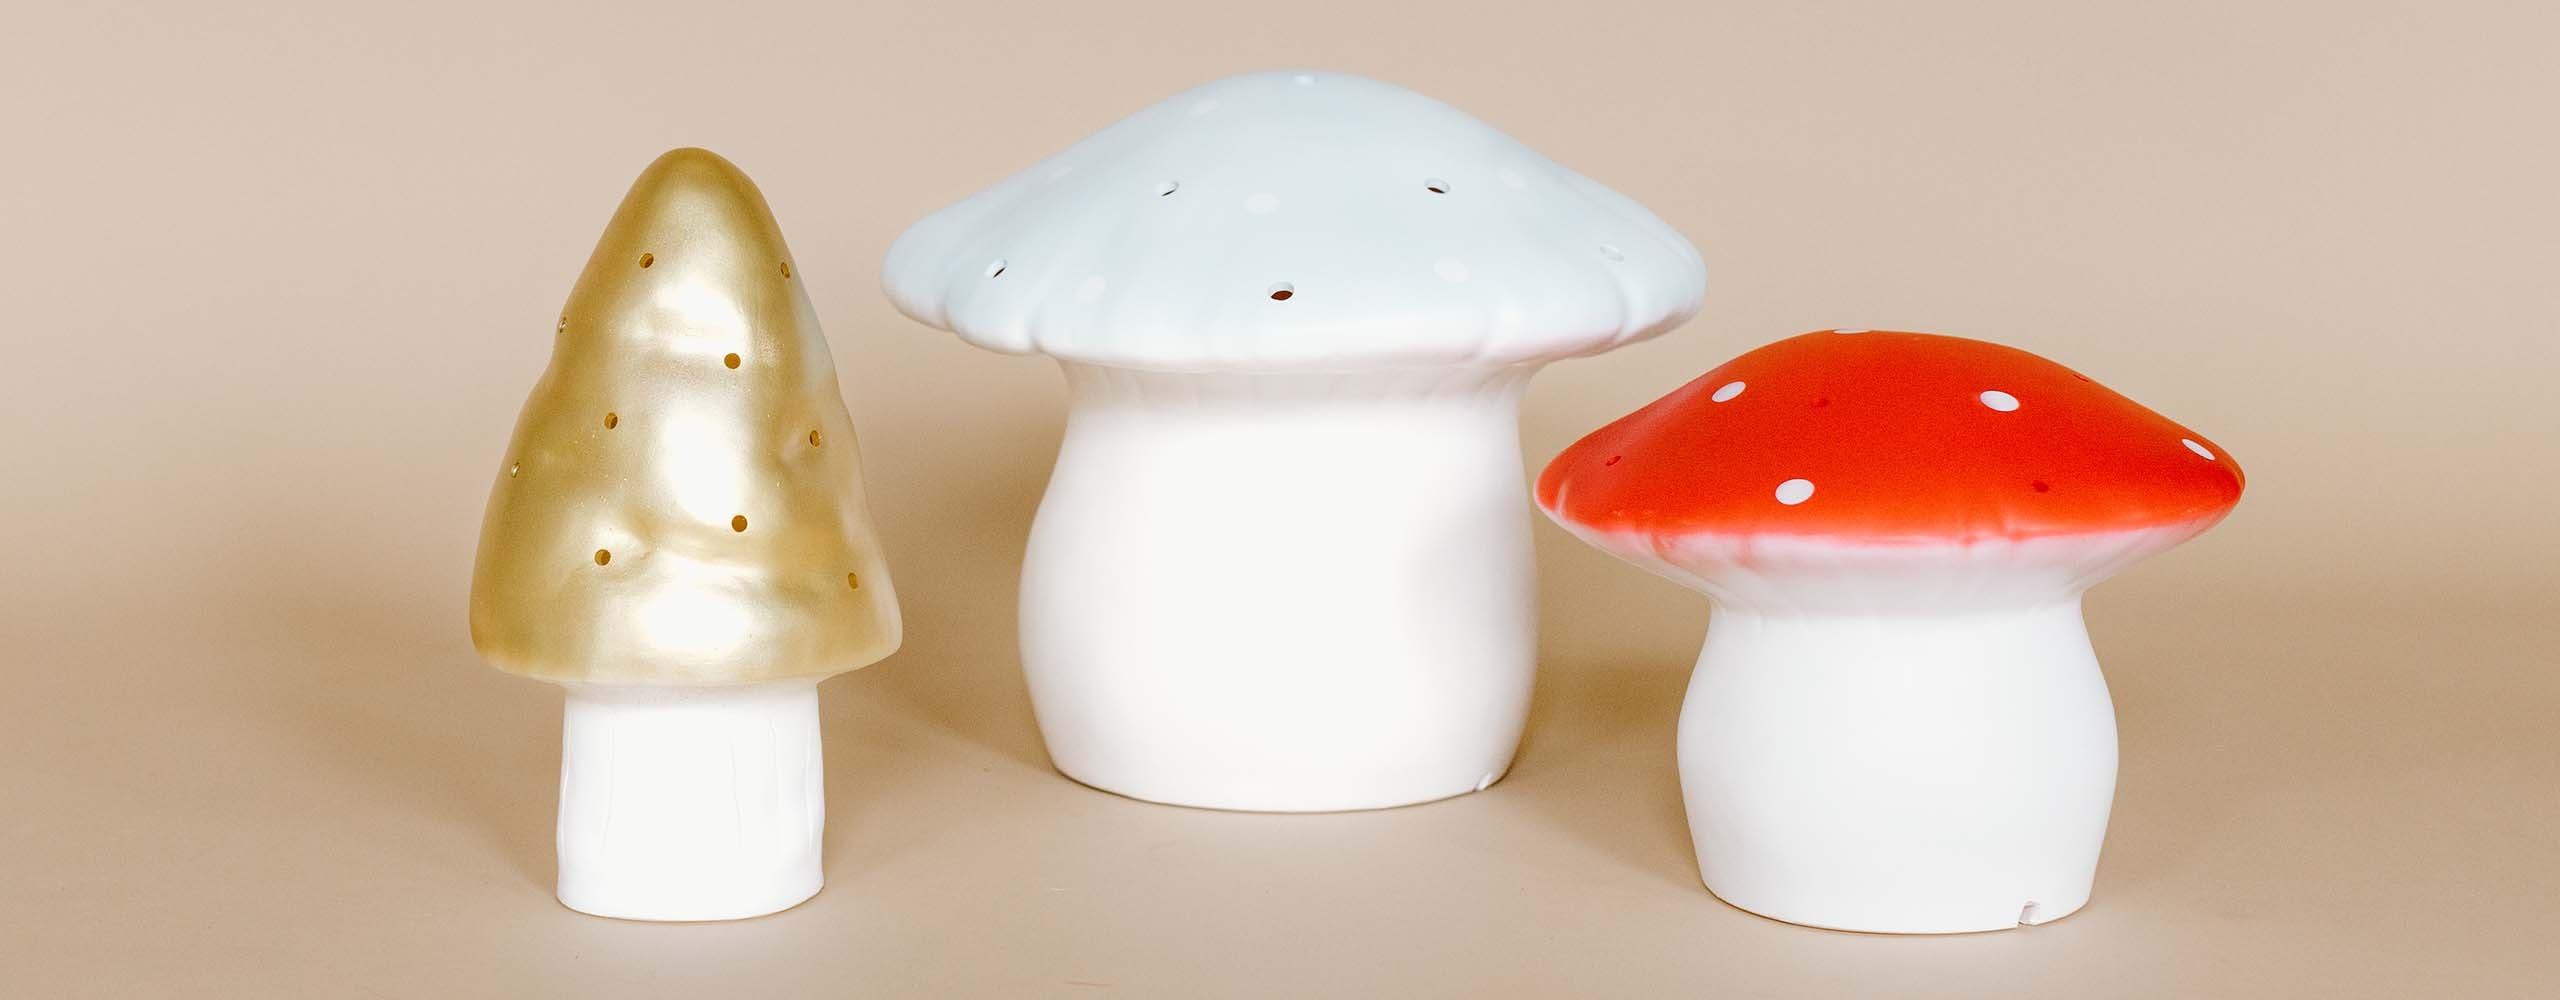 Three decorative ceramic mushrooms on a beige background.